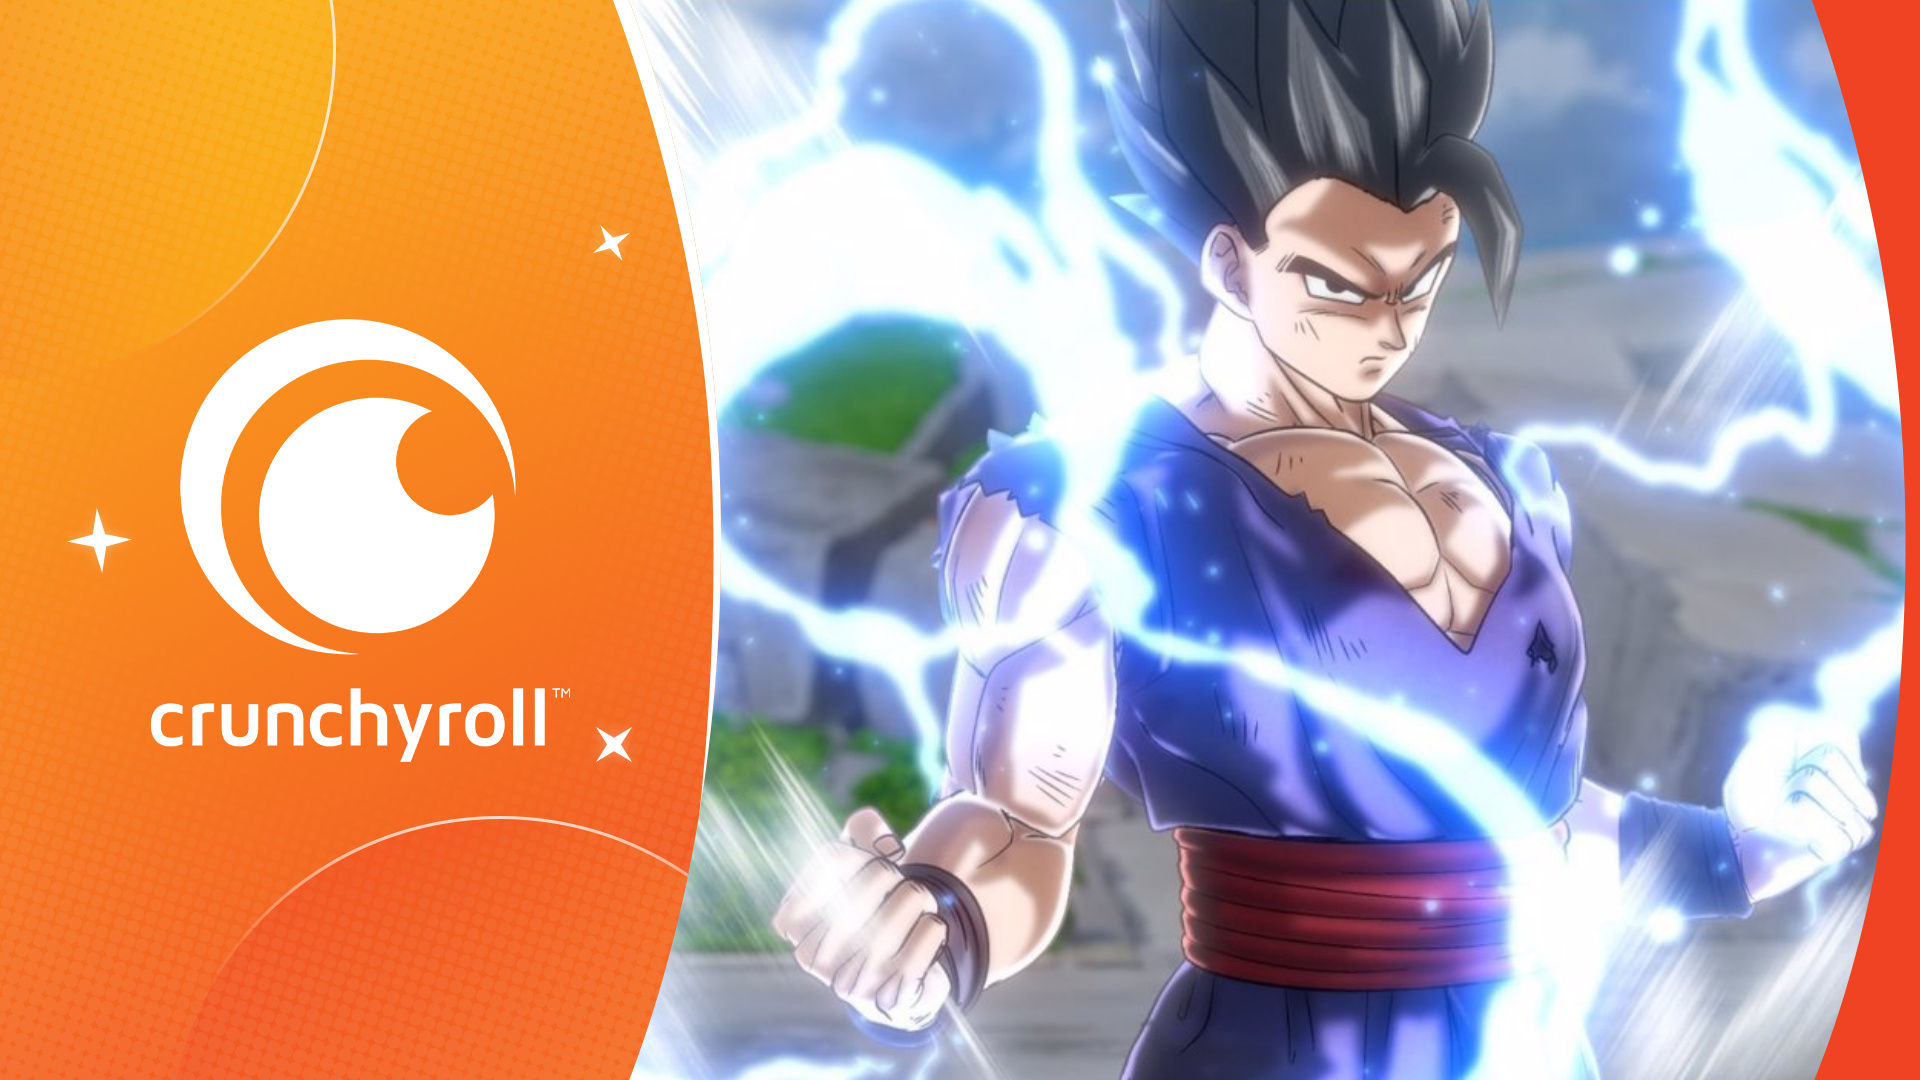 Dragon Ball Super en Español - Crunchyroll